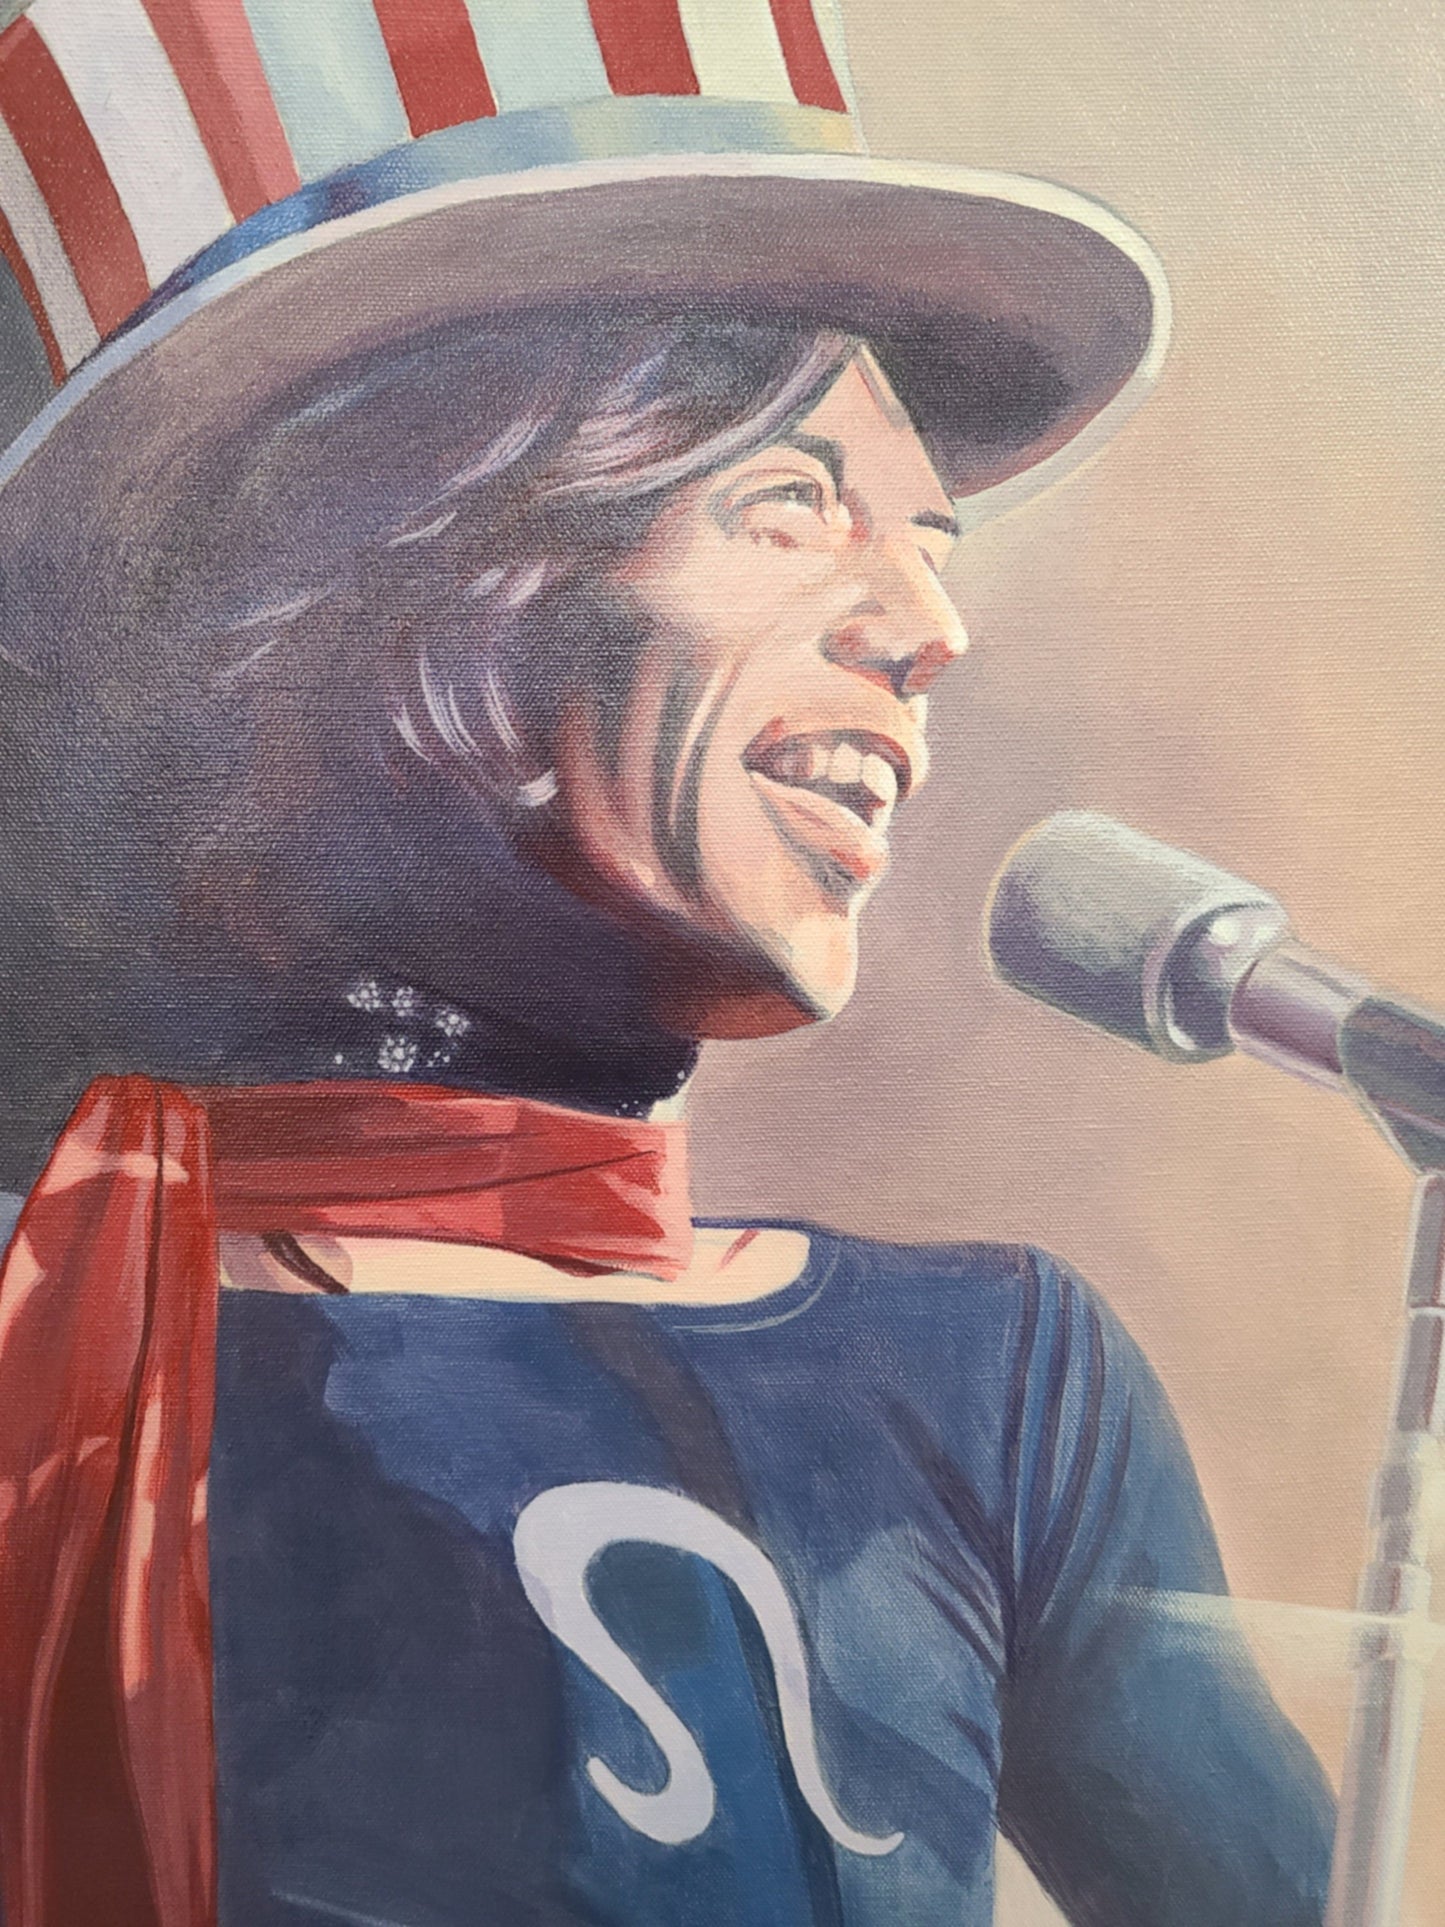 Mick Jagger painting